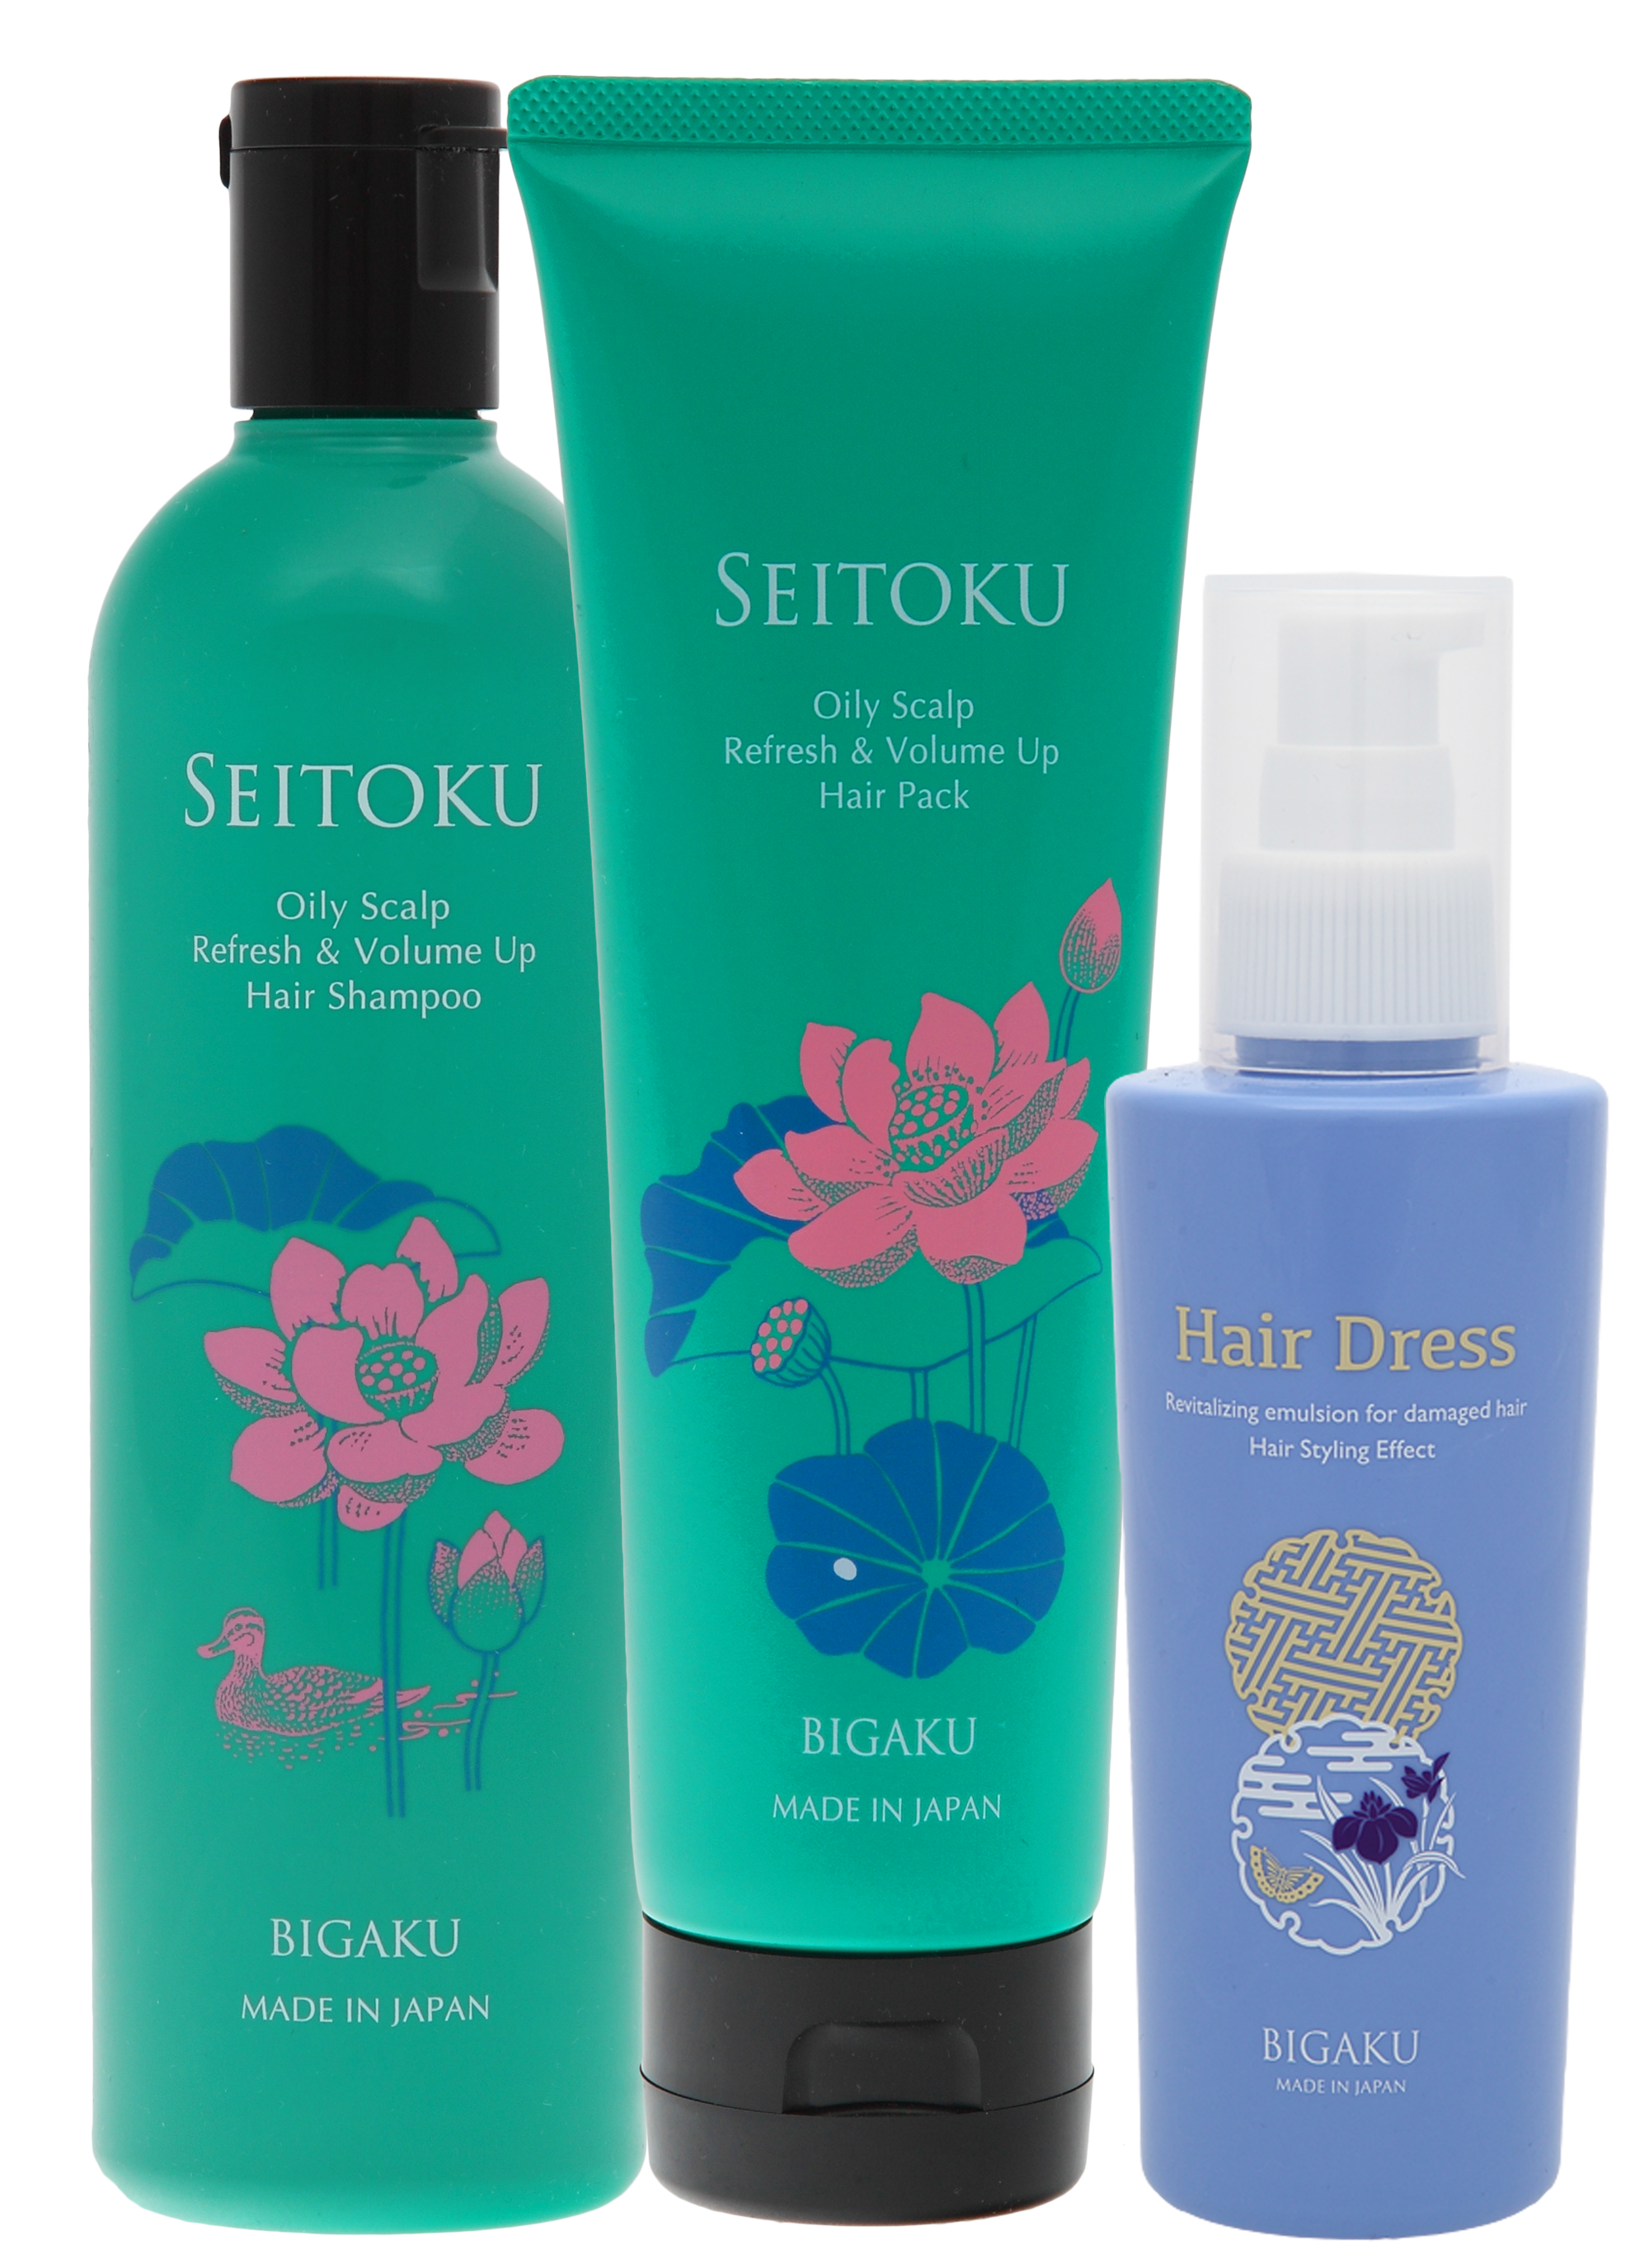 Seitoku Oily Scalp Refresh&Volume Up набор шампунь, маска и Hair Dress, 330мл + 250г + 150г